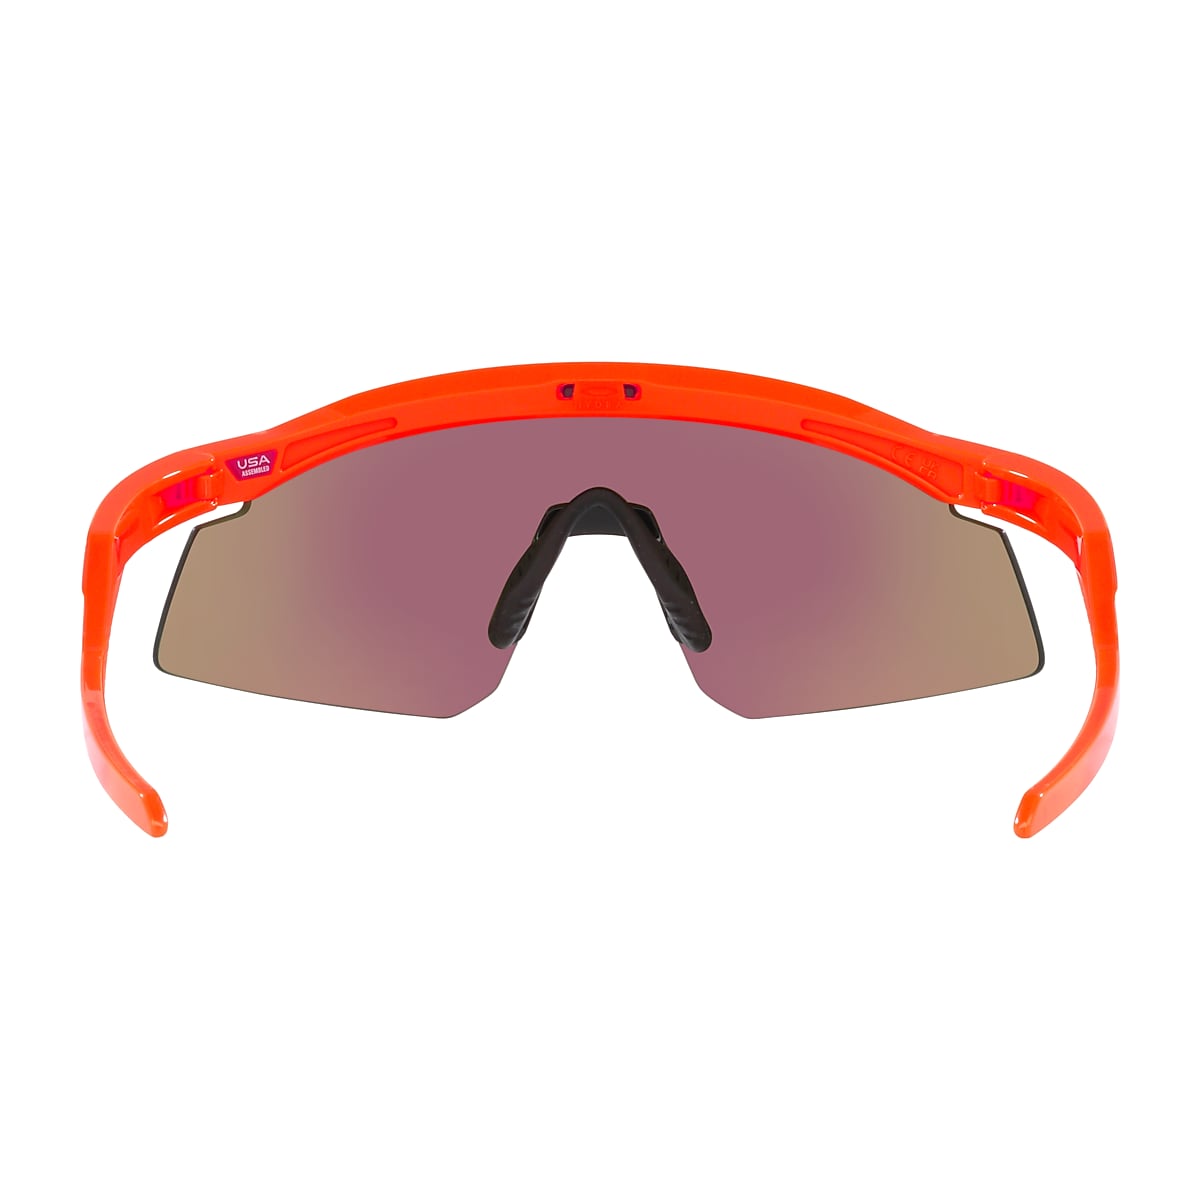 Top 32+ imagen oakley orange sunglasses